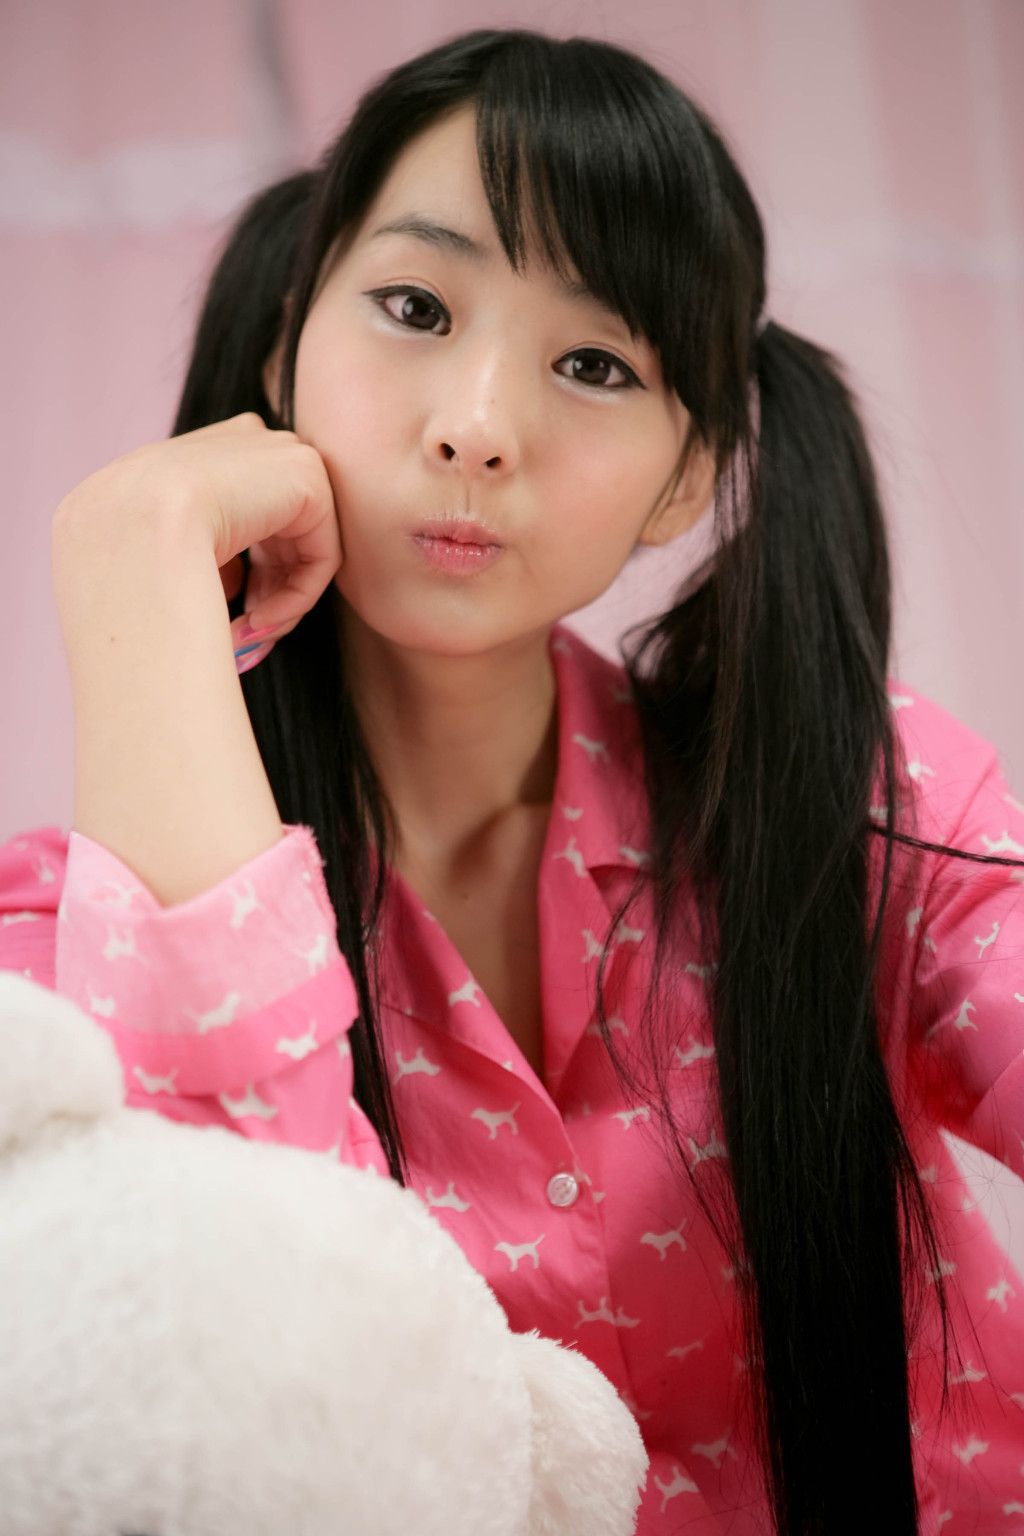 Seo You Jin Pink Pjs Jpg